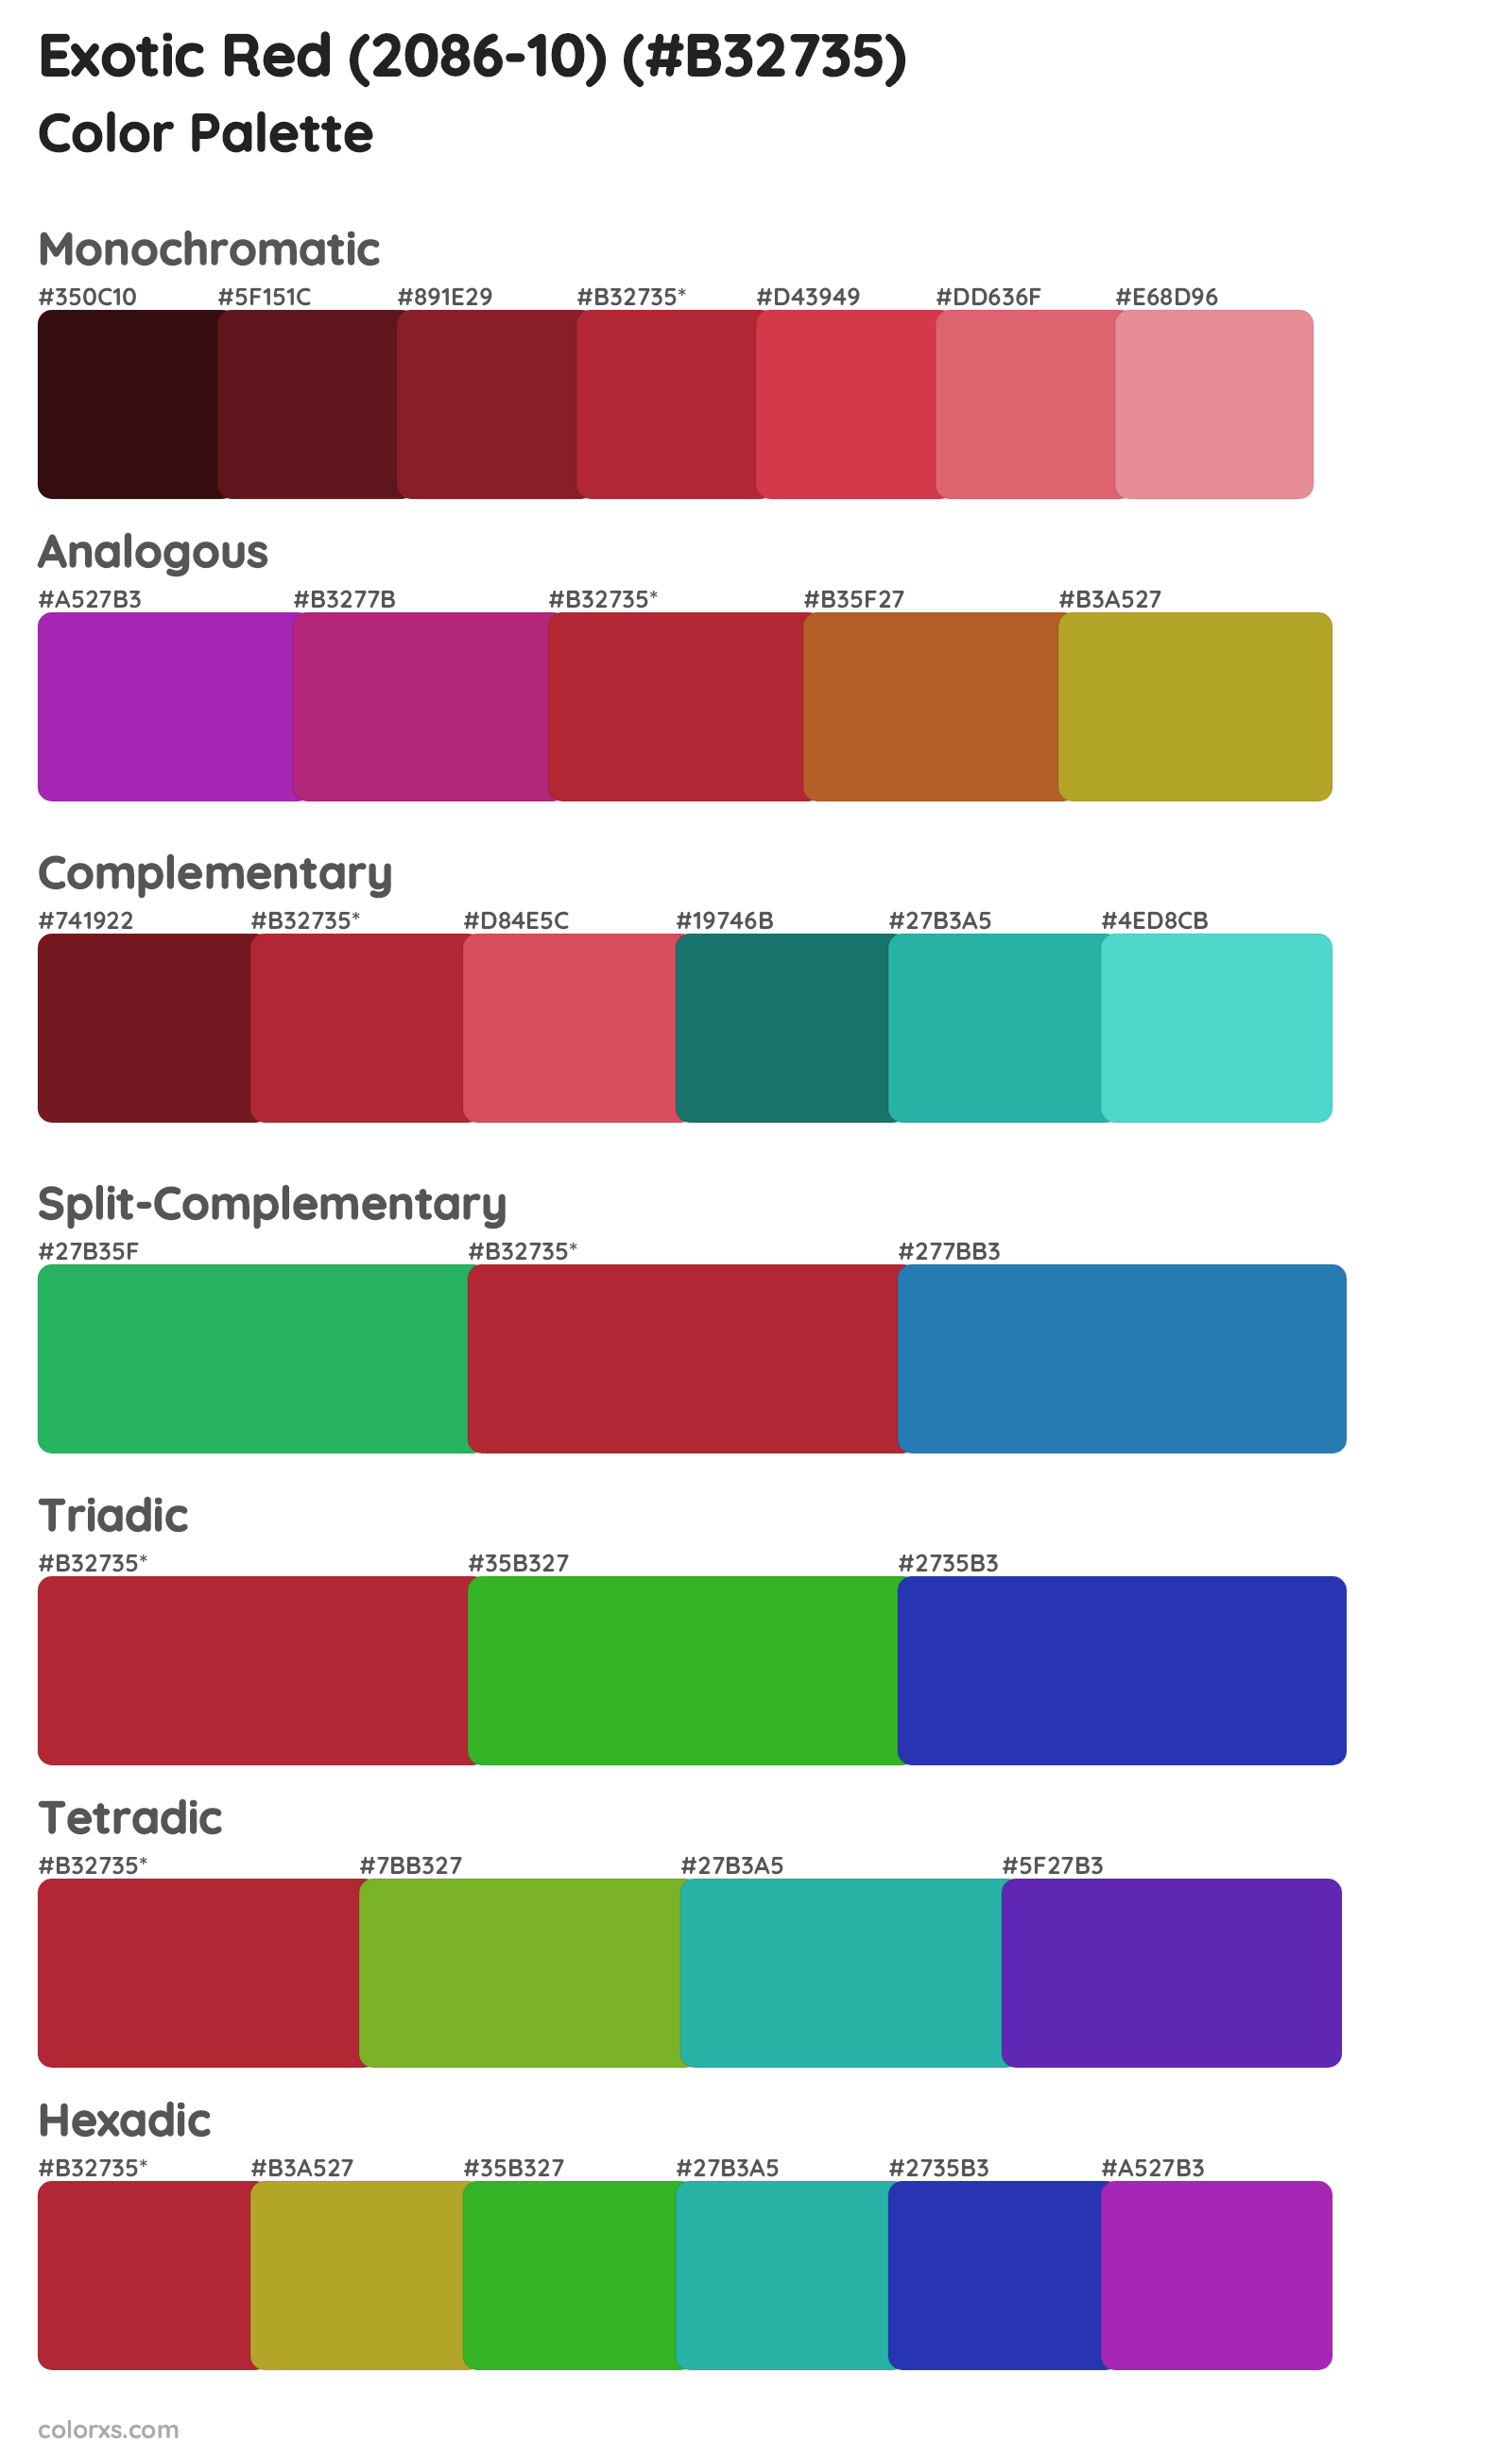 Exotic Red (2086-10) Color Scheme Palettes